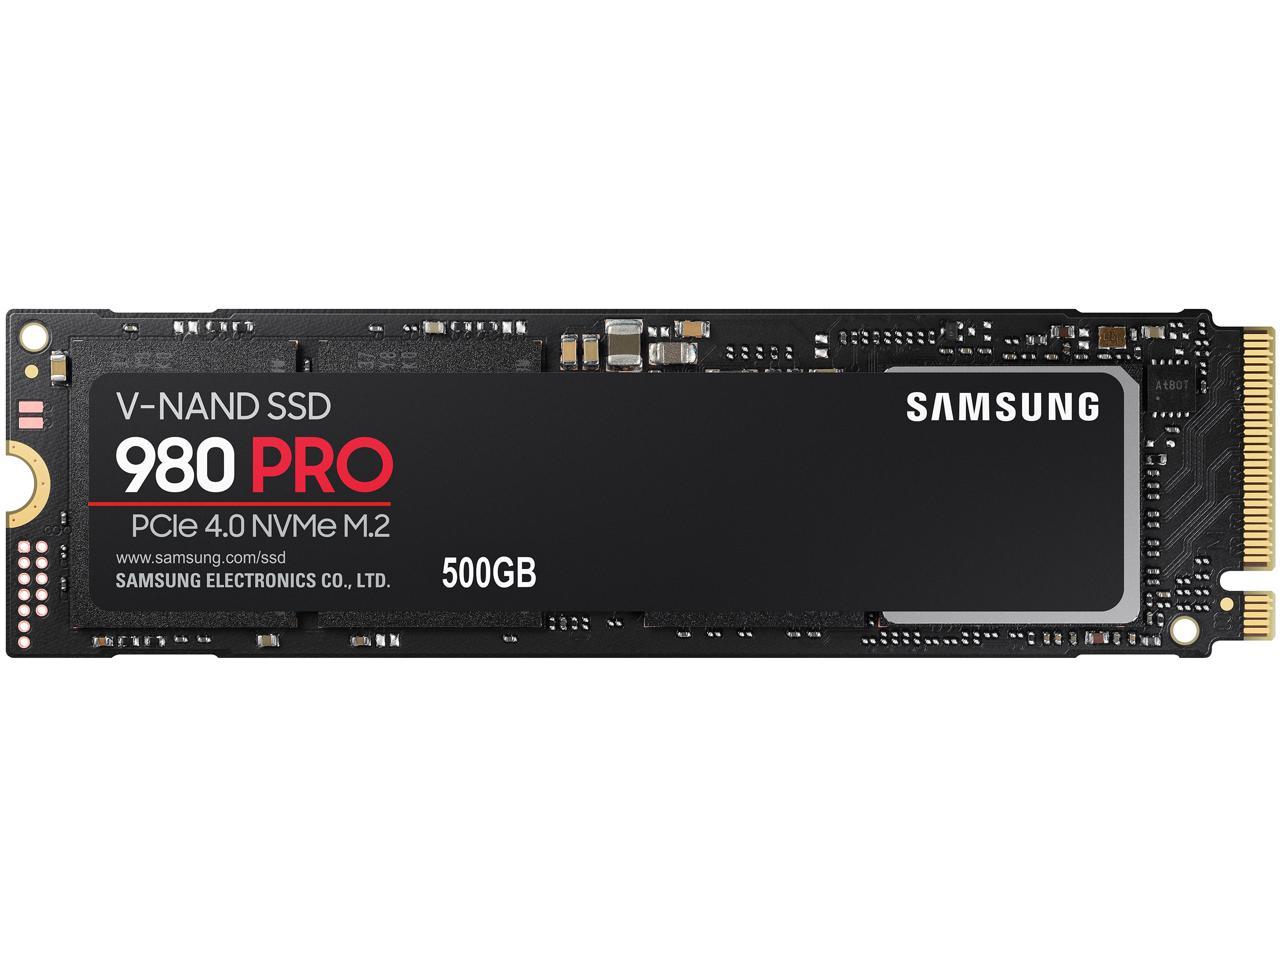 SAMSUNG 980 PRO SSD 500GB, PCIe 4.0 M.2 2280, Speeds Up-to 6,900MB